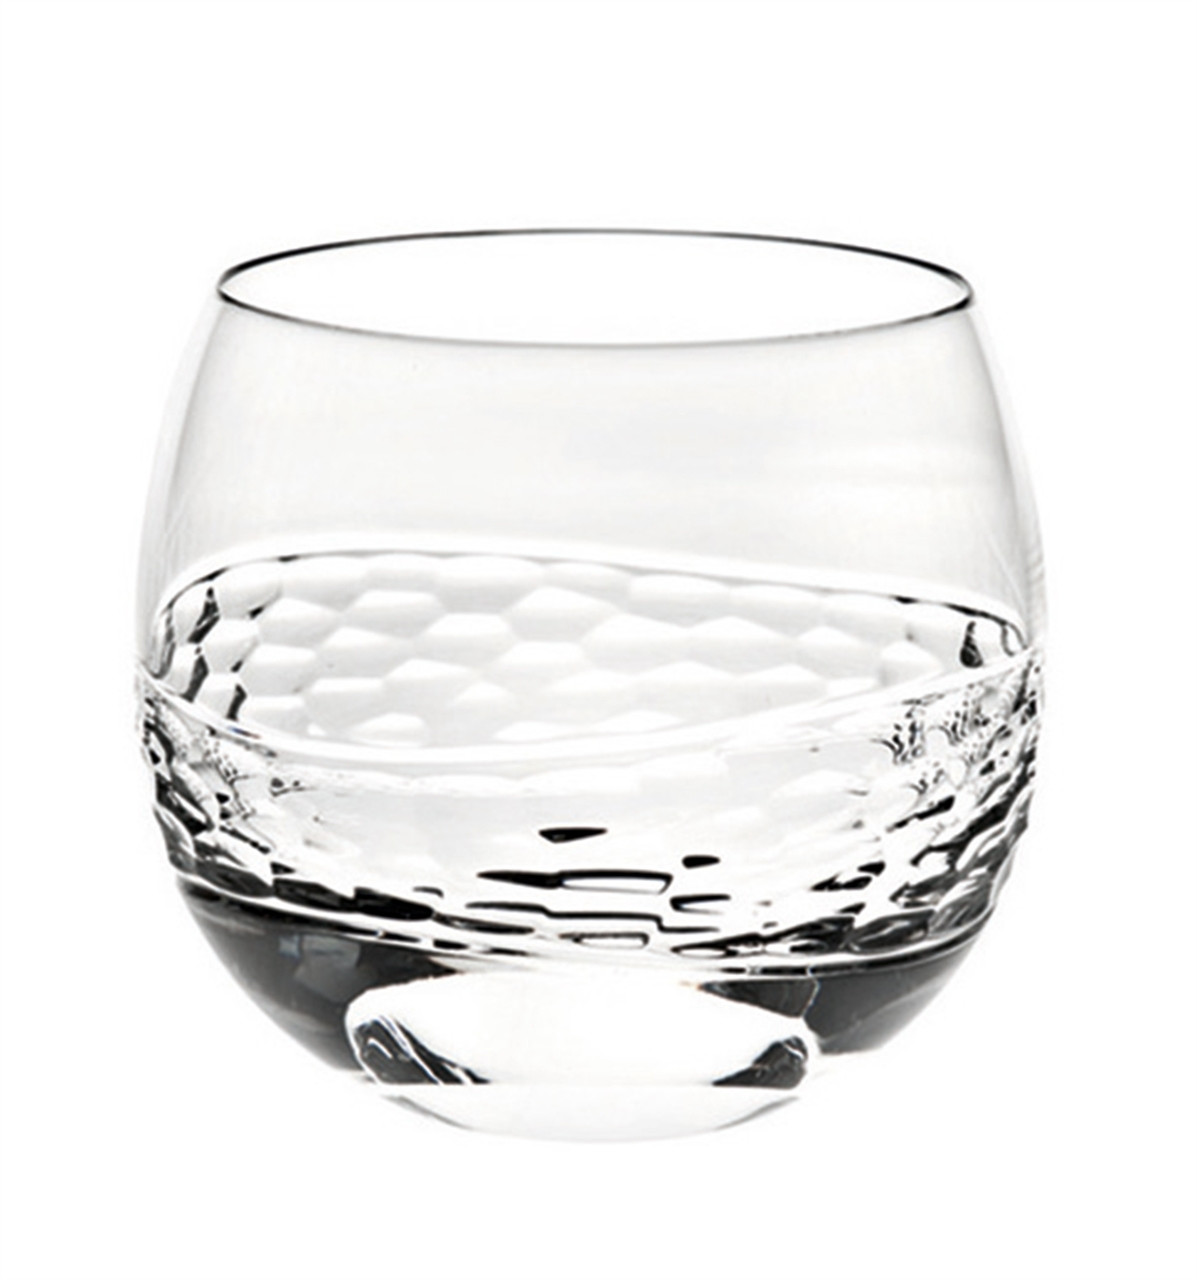 20 Nice Waterford Lismore Diamond Vase 2024 free download waterford lismore diamond vase of glasses inside magma glass old fashion